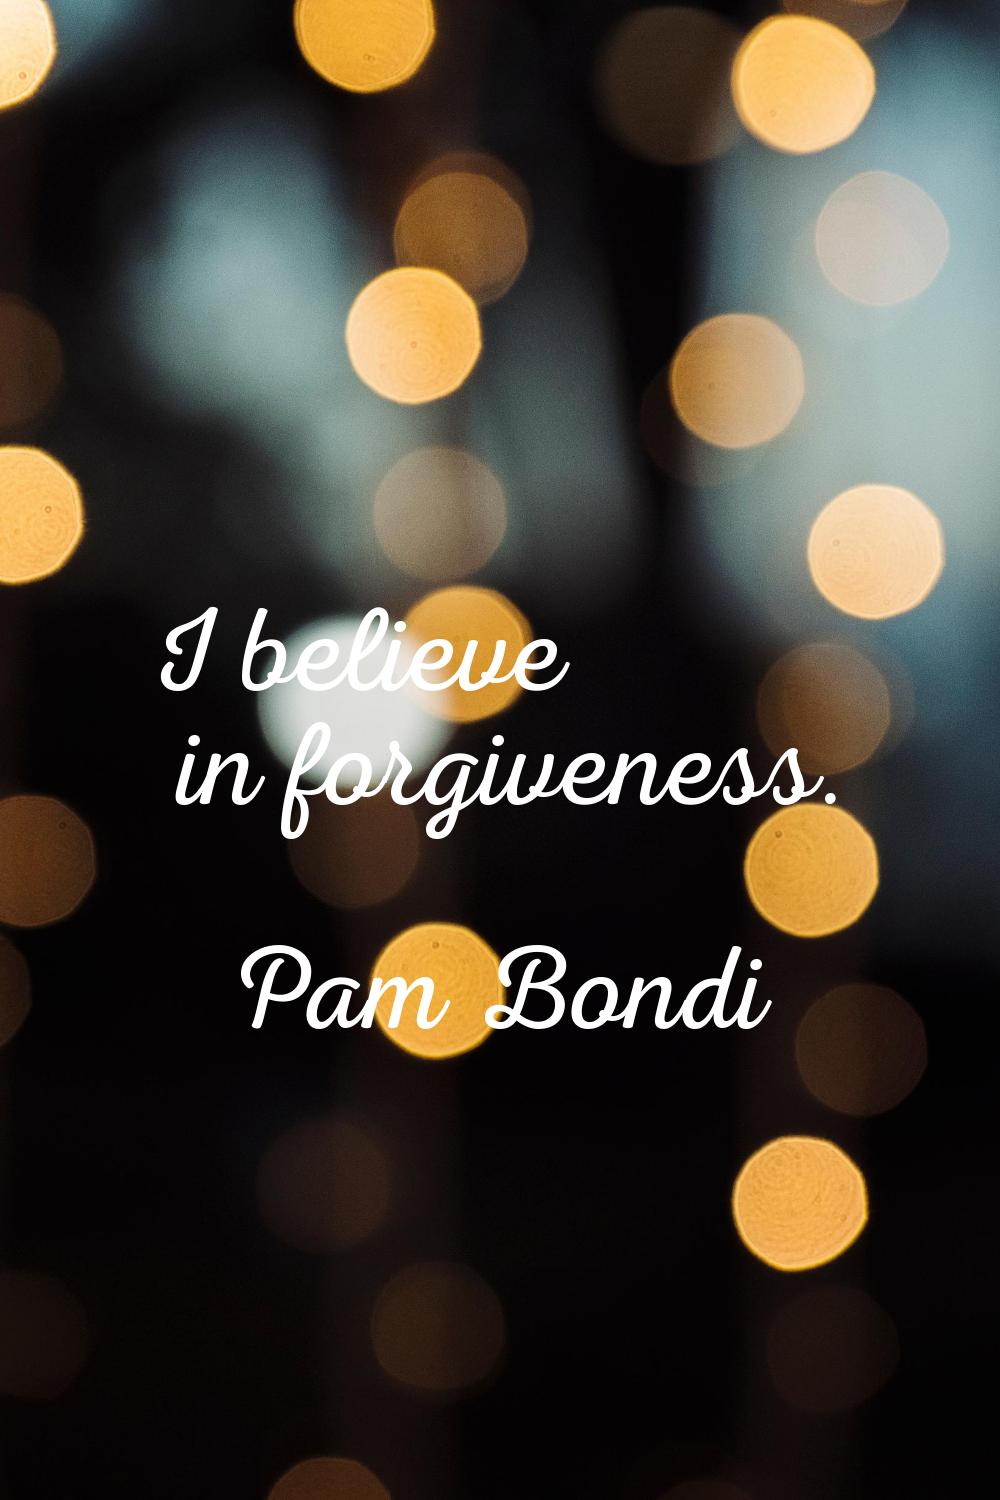 I believe in forgiveness.